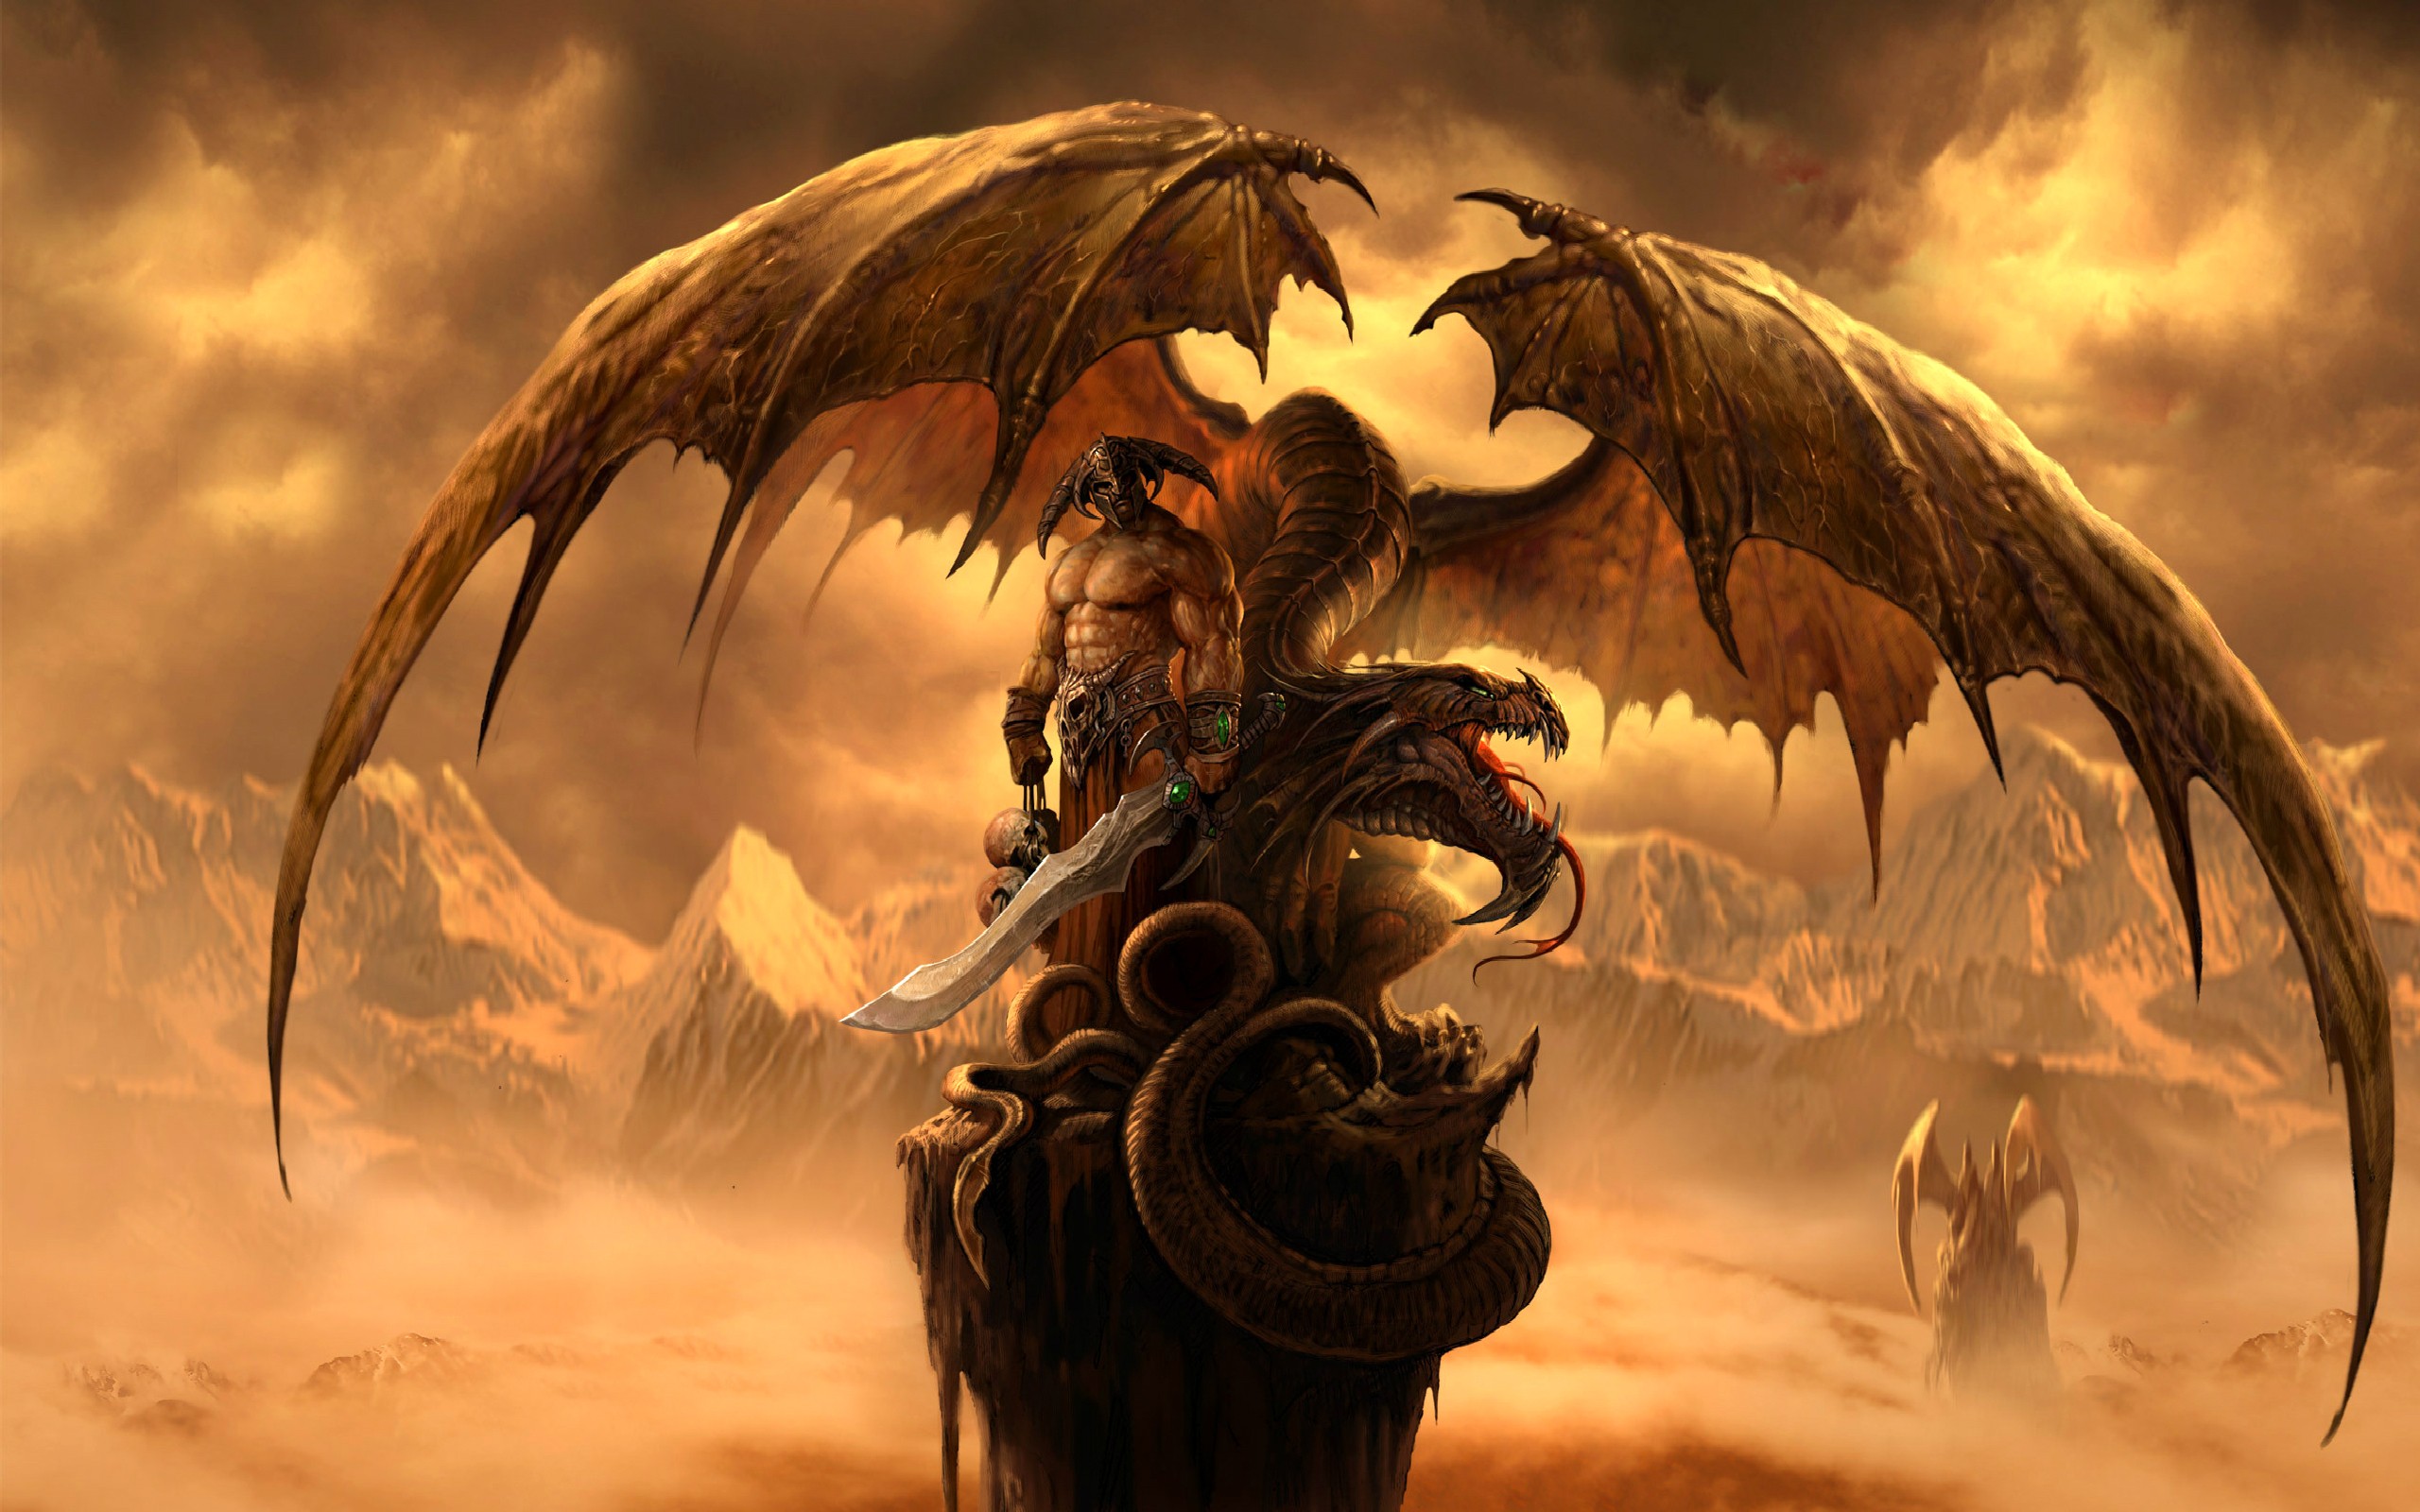 General 2560x1600 fantasy art dragon fantasy men creature sword weapon muscular wings landscape standing helmet muscles skull